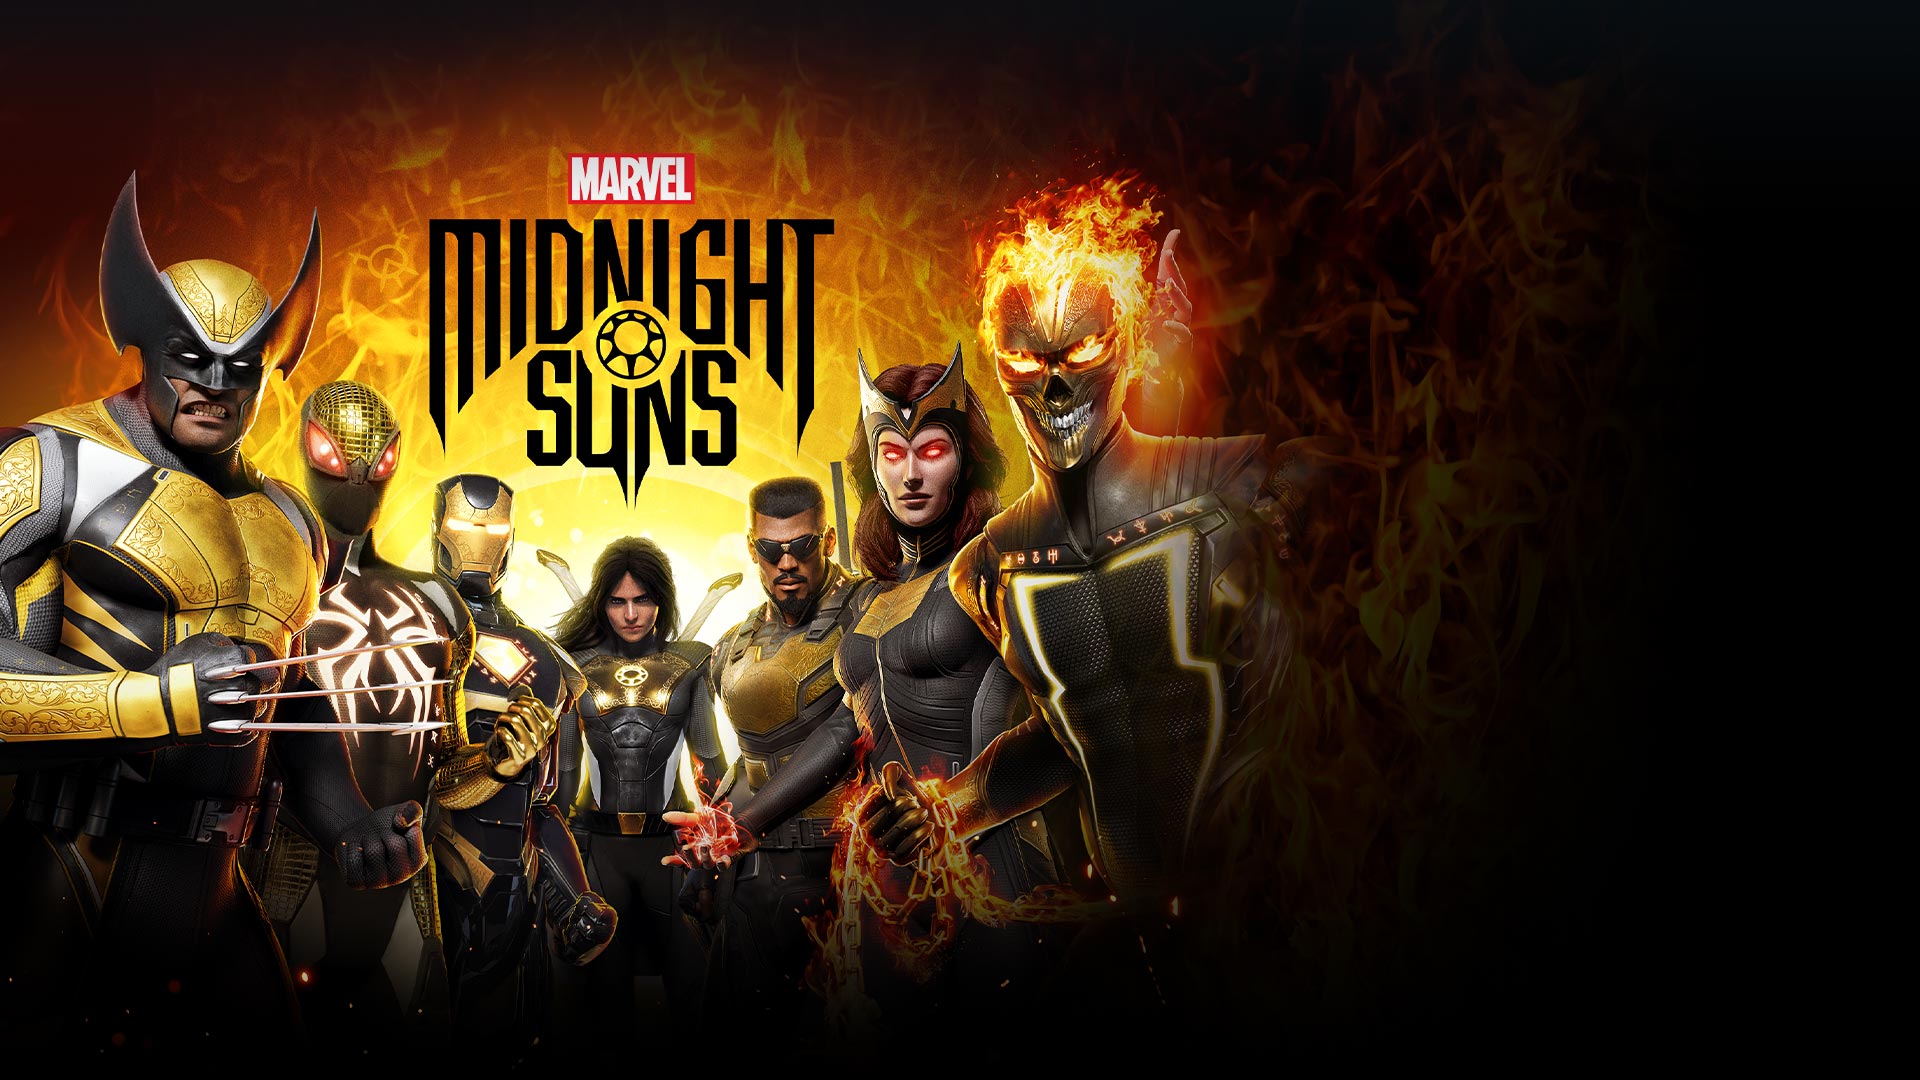 Marvel Midnight Suns, grupa superbohaterów, w tym Wolverine, Ironman, Ghost Rider i Blade.